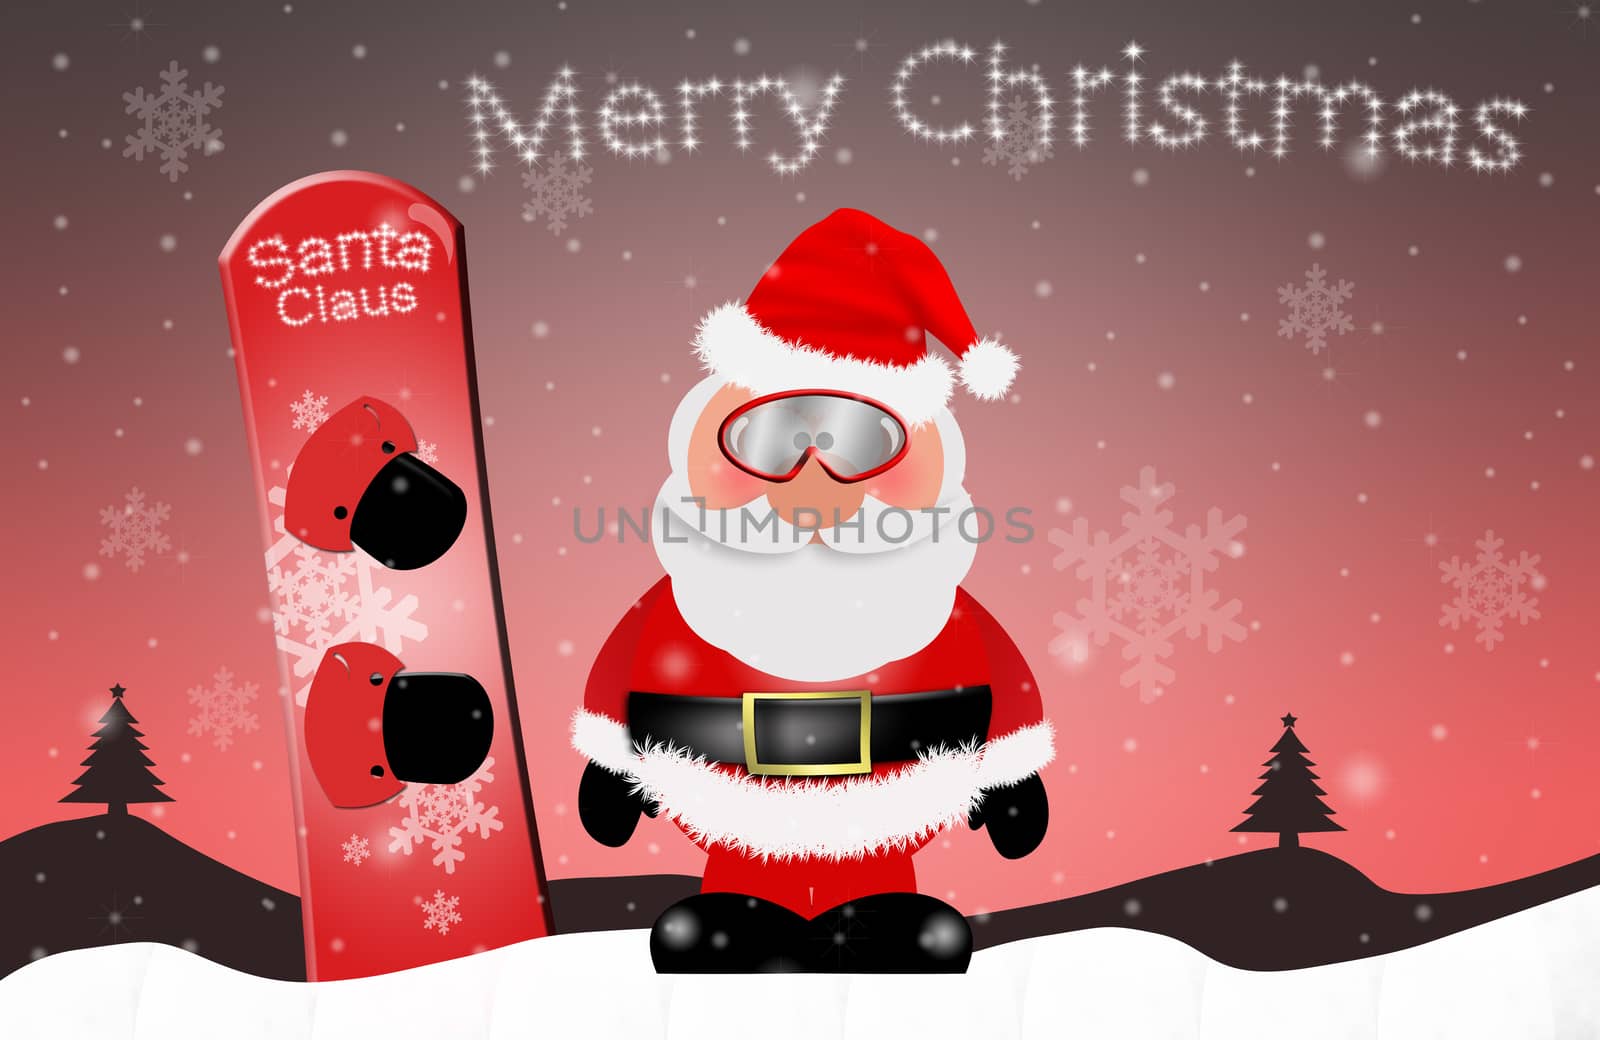 Santa Claus with snowboard